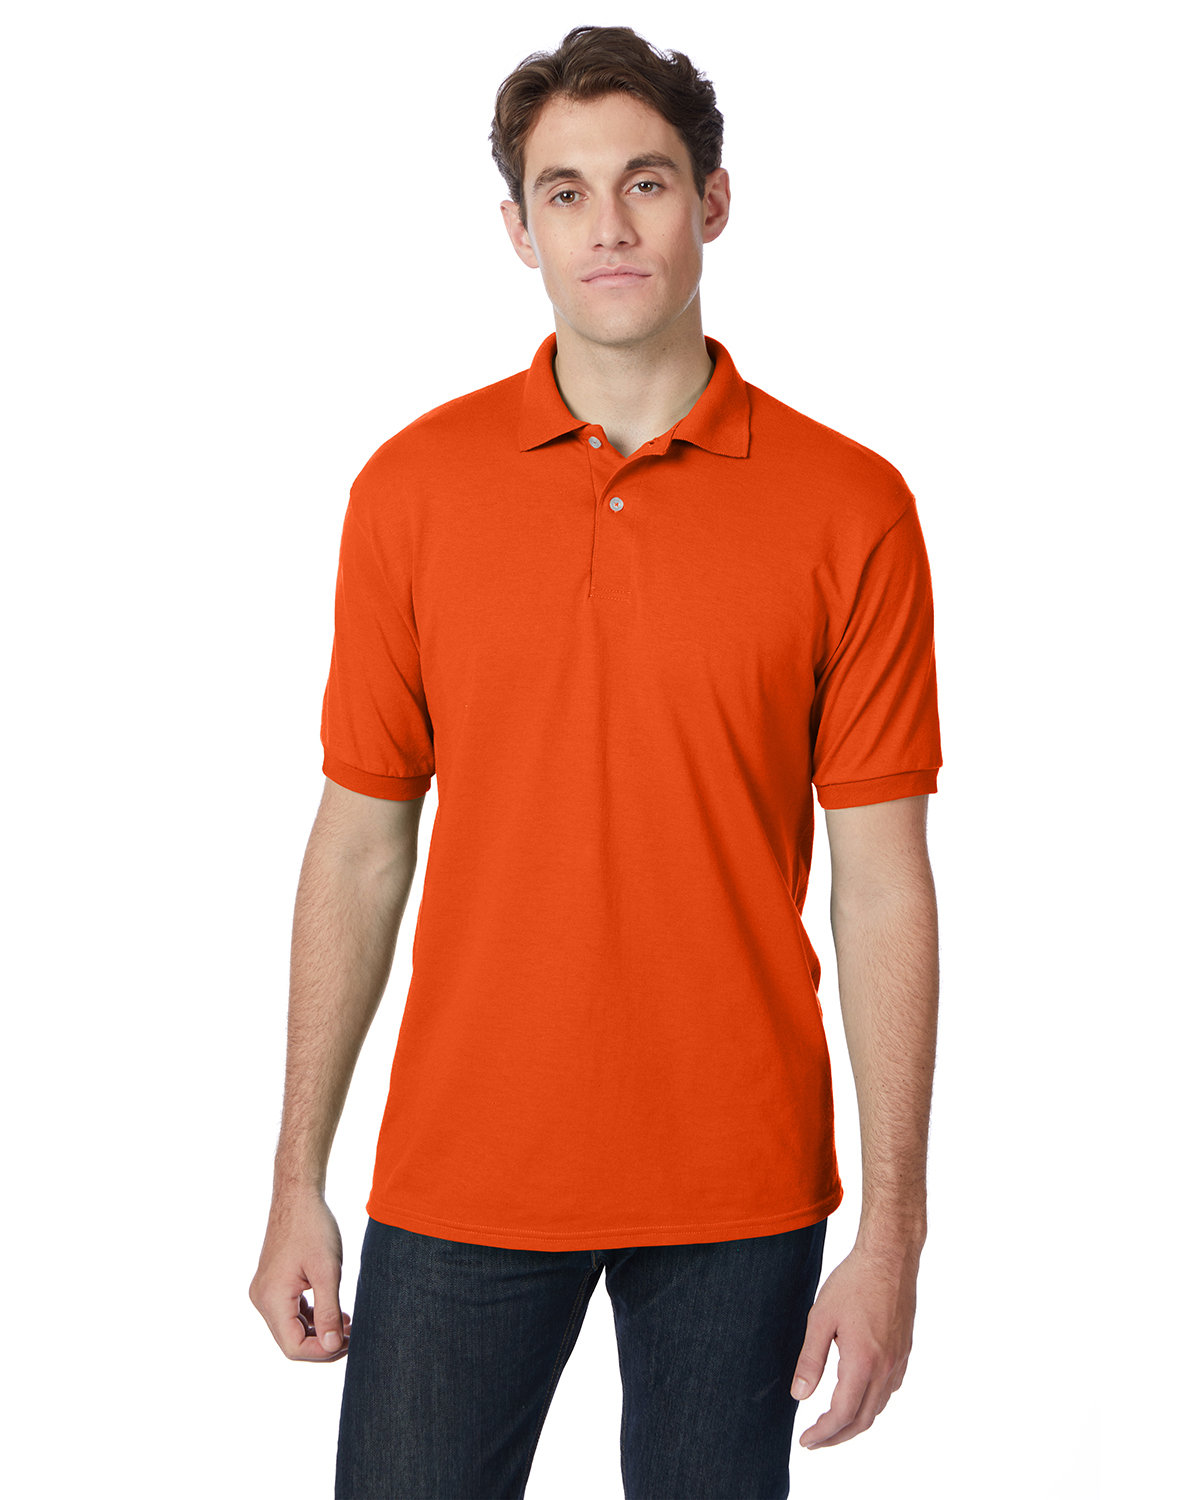 Hanes Adult 50/50 EcoSmart® Jersey Knit Polo orange 